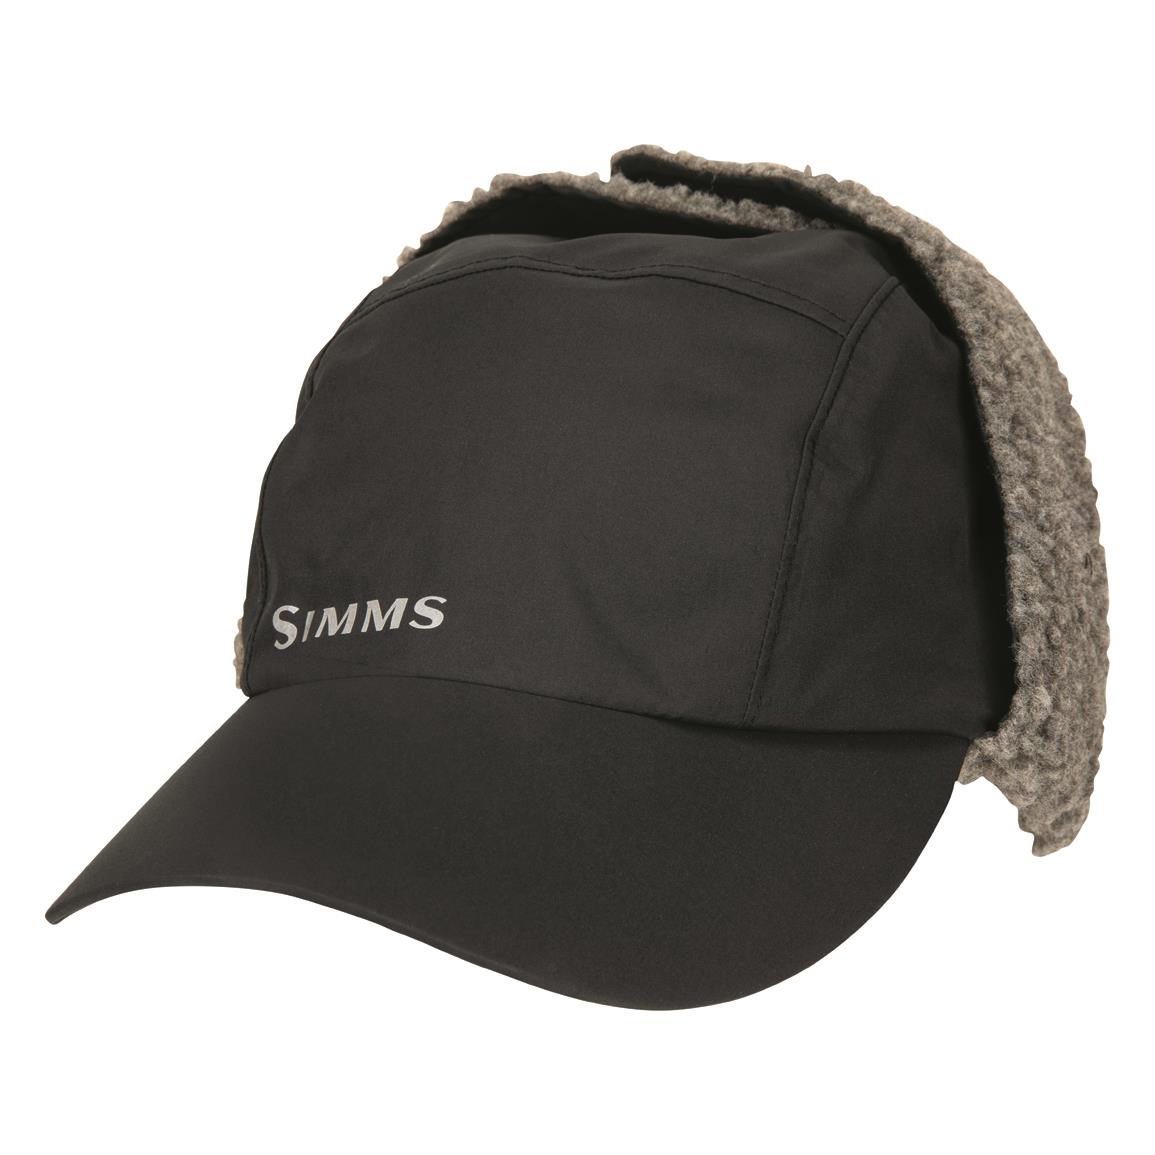 Simms Challenger Waterproof Insulated Hat, Black